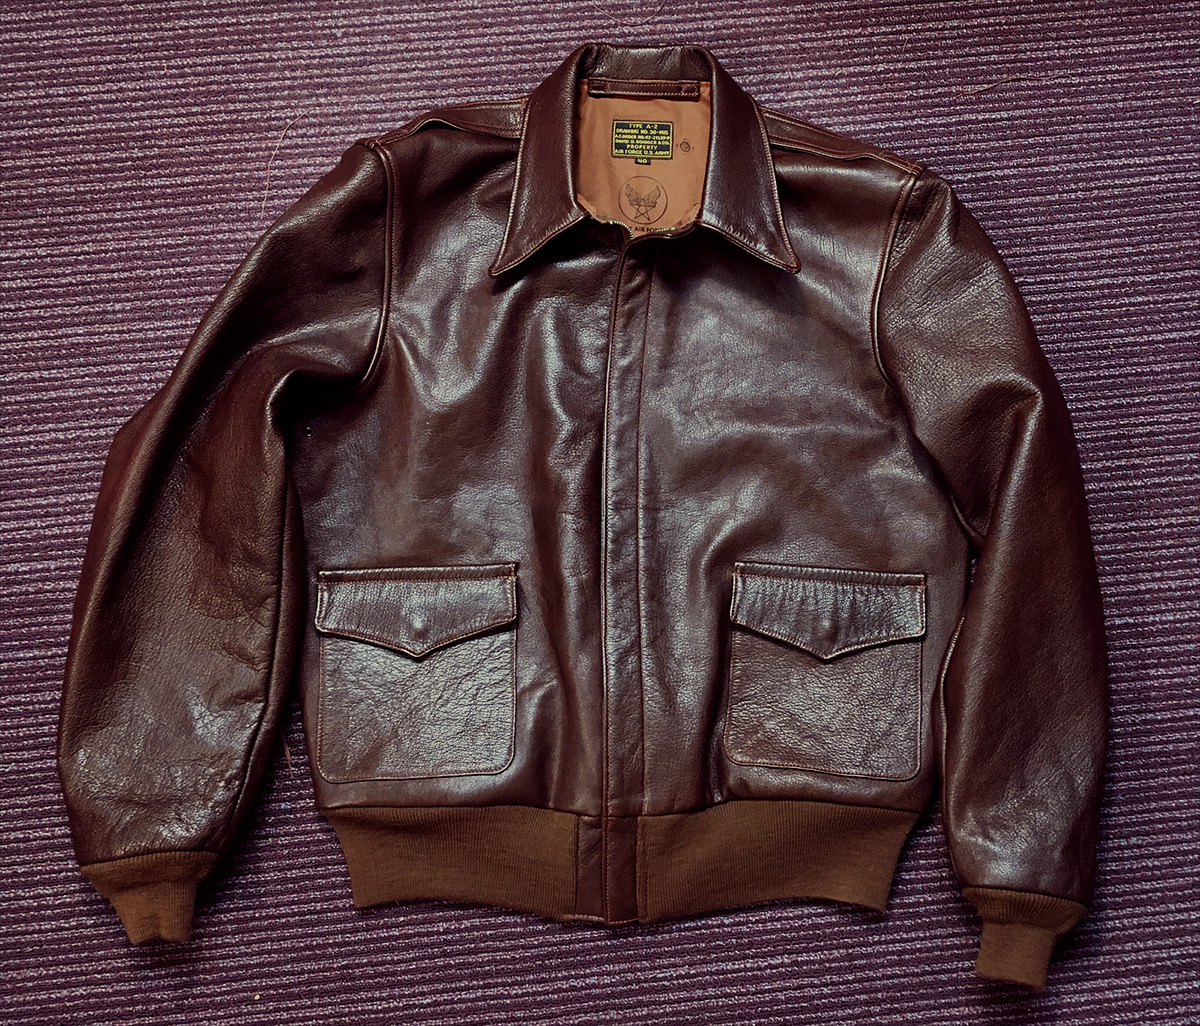 Show us your goats, repro or original | Vintage Leather Jackets Forum